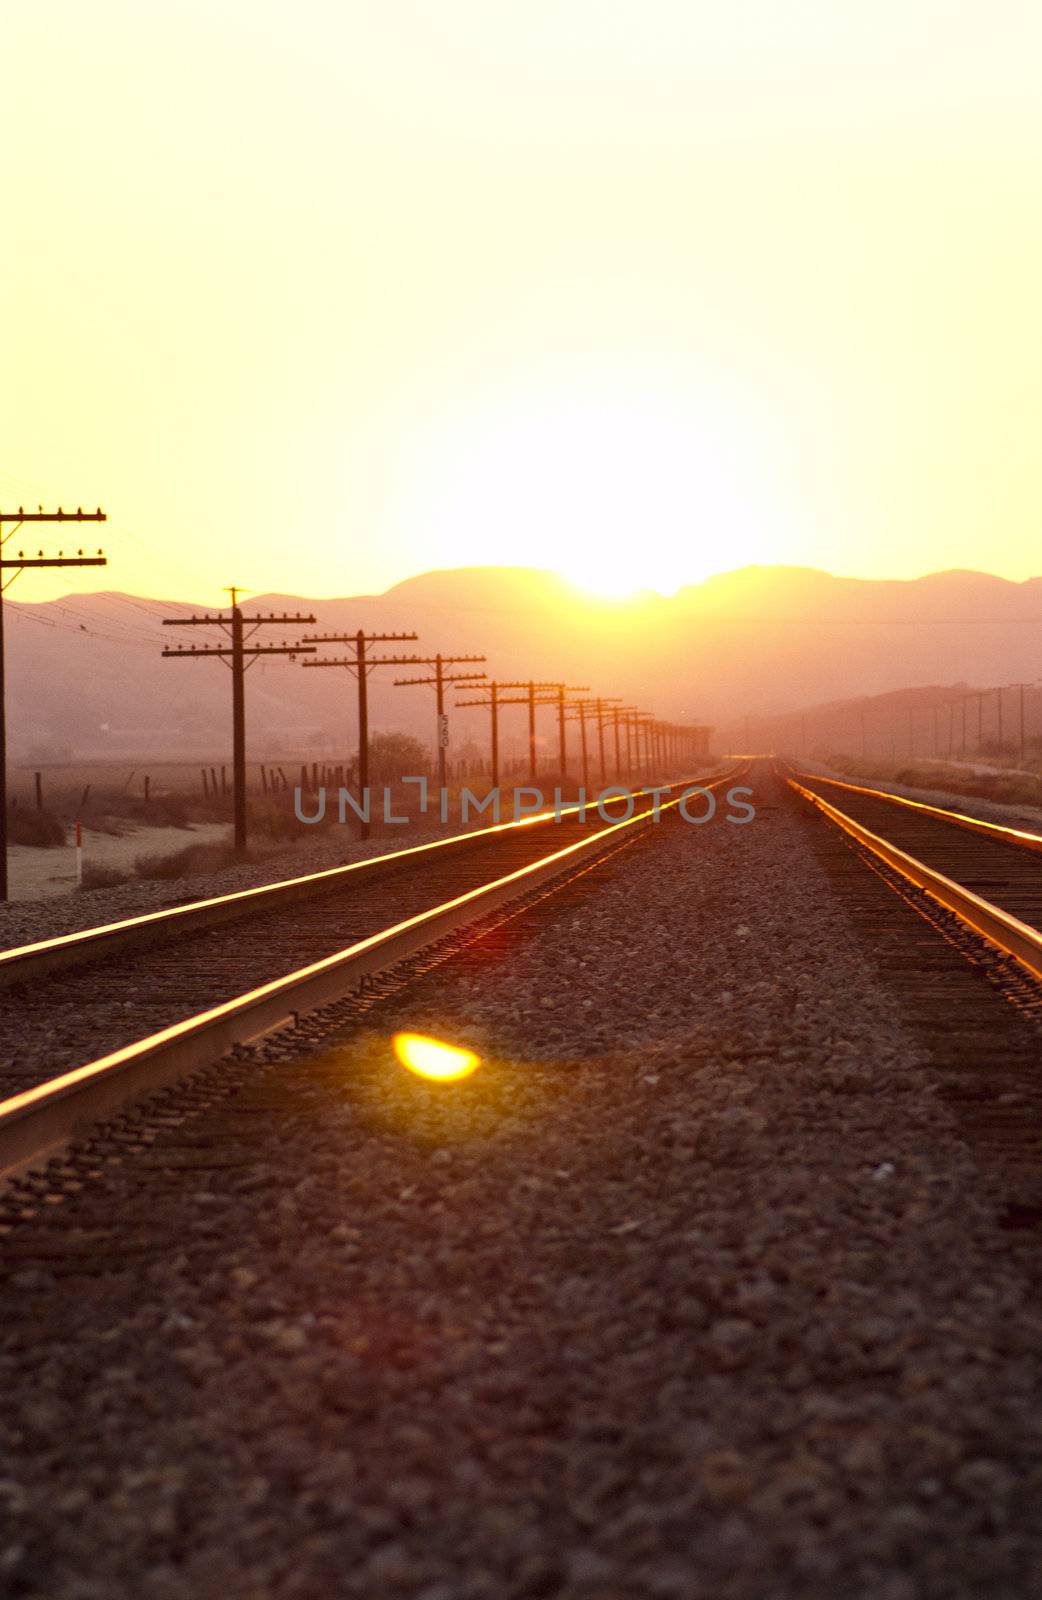 Train tracks into the sunset